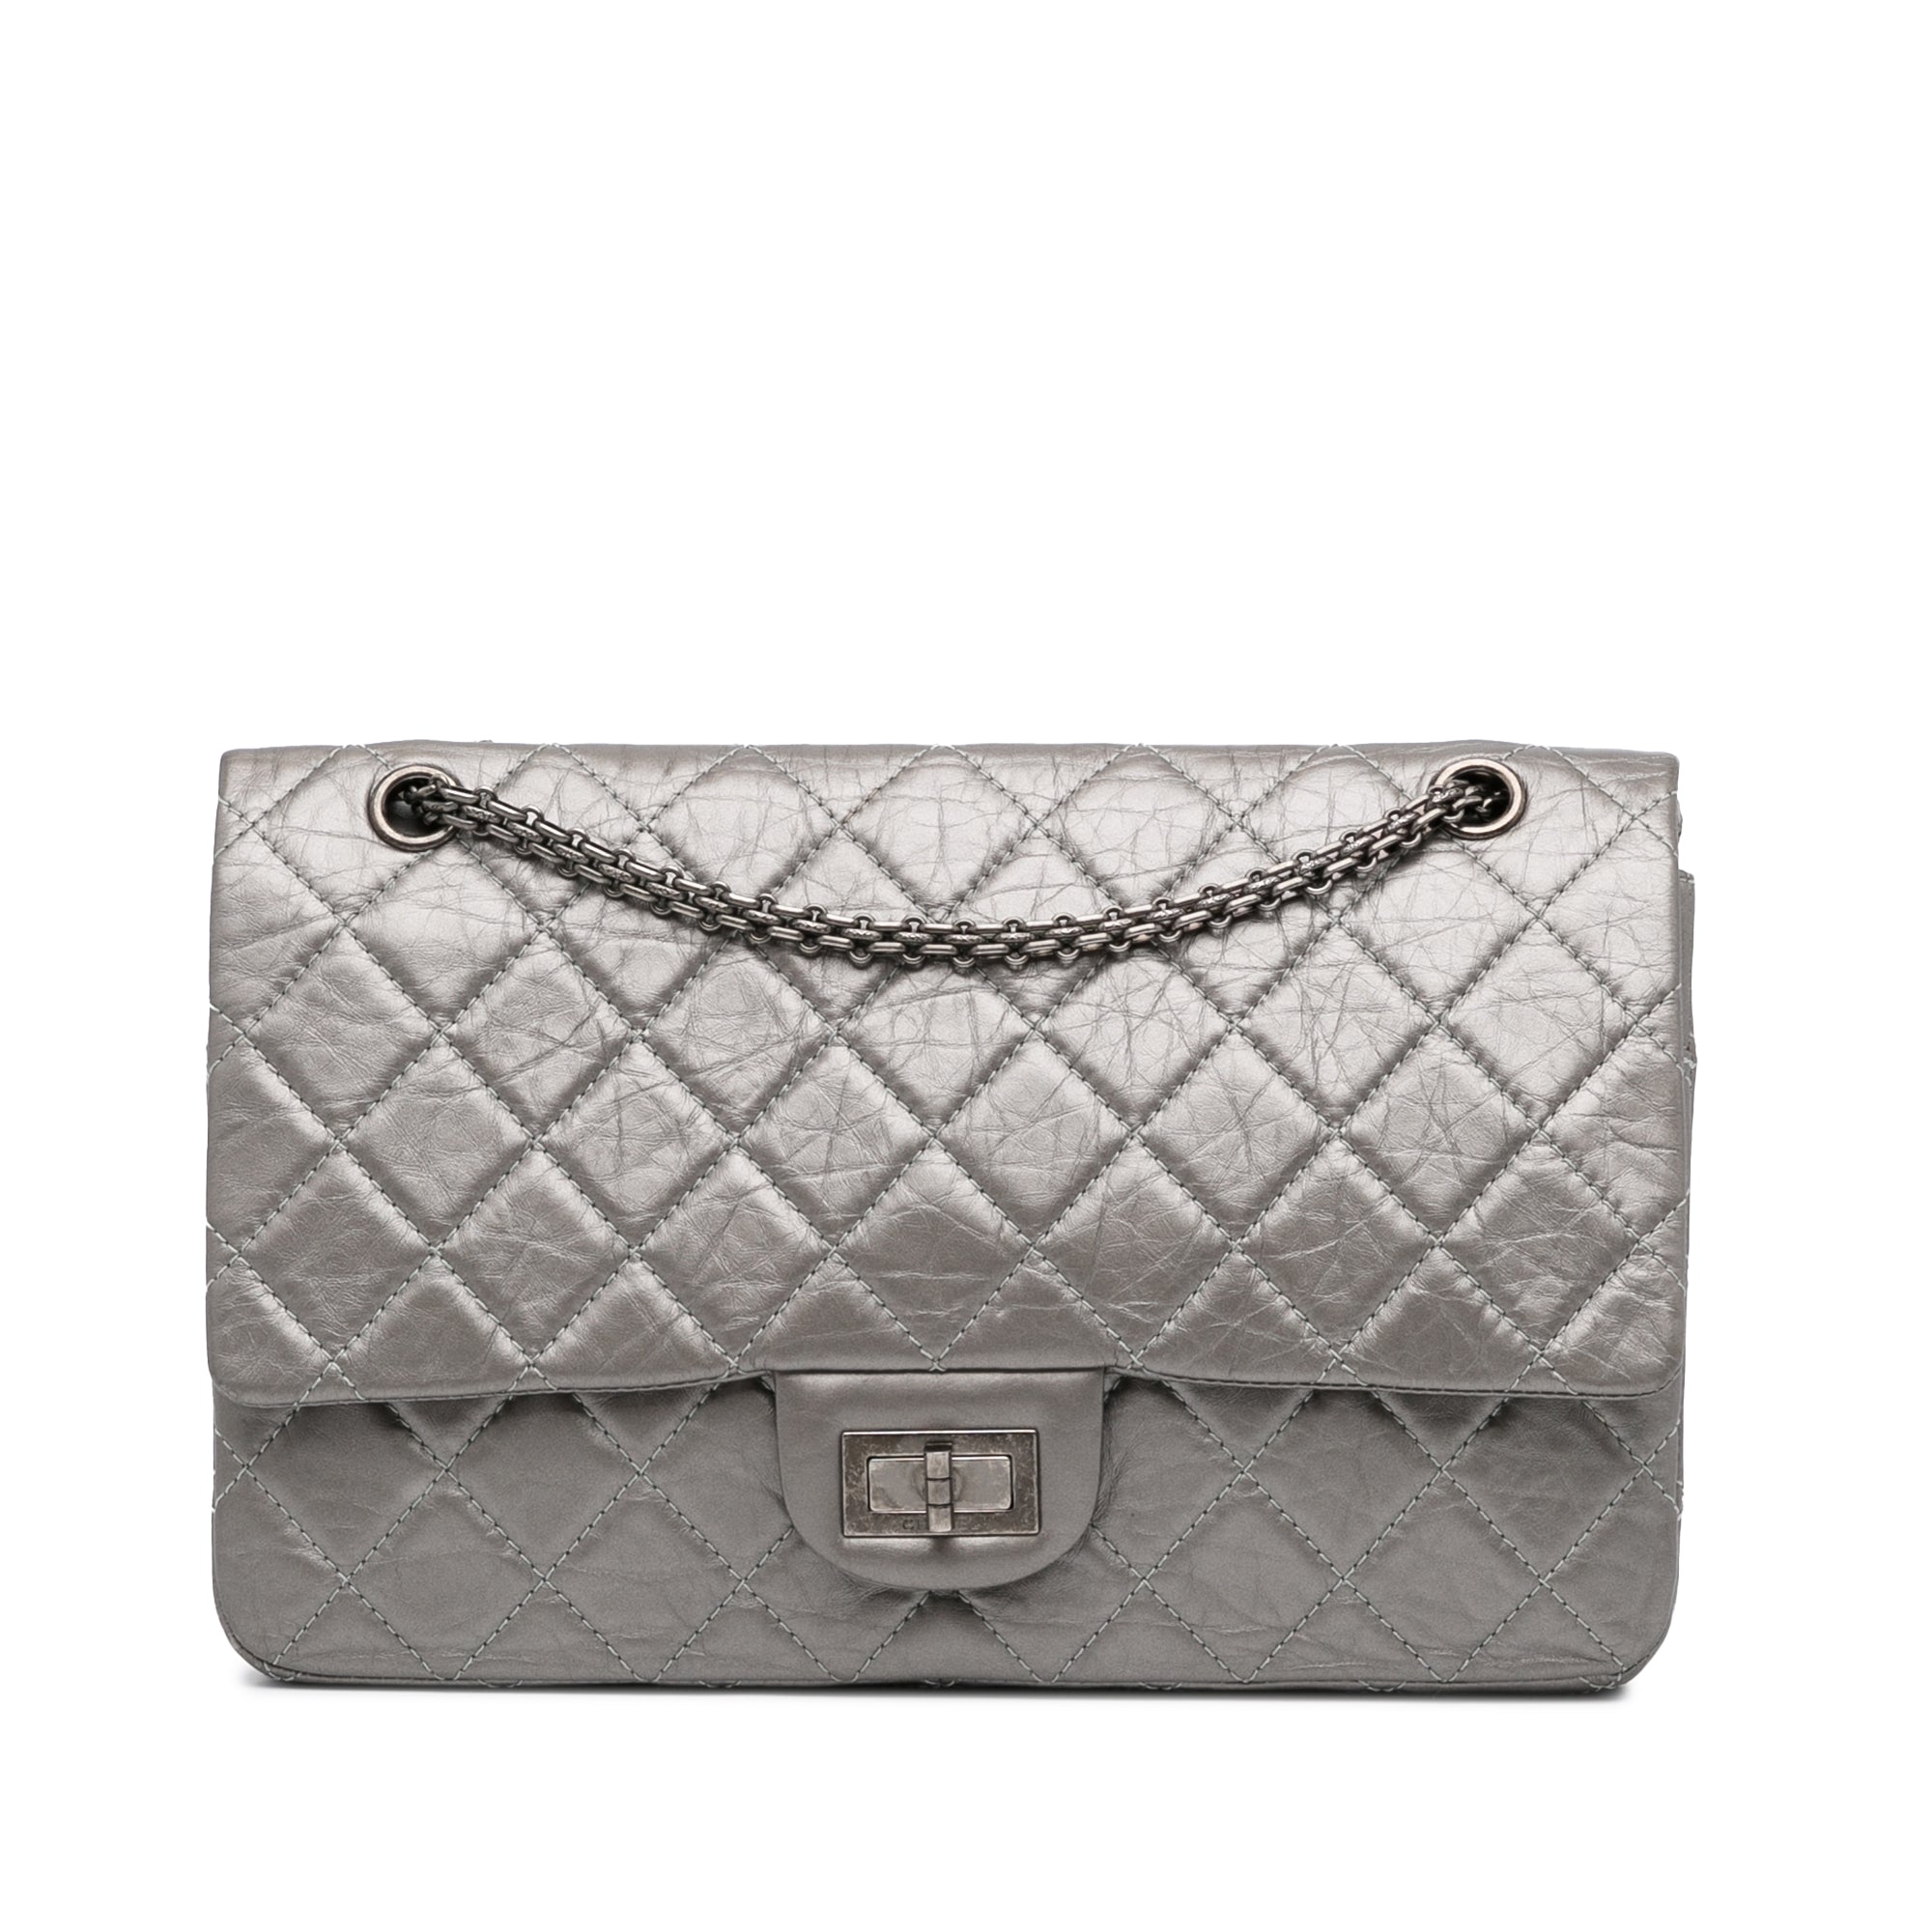 Shop Handbags - Page 5 of 6 - Luxury In Reach